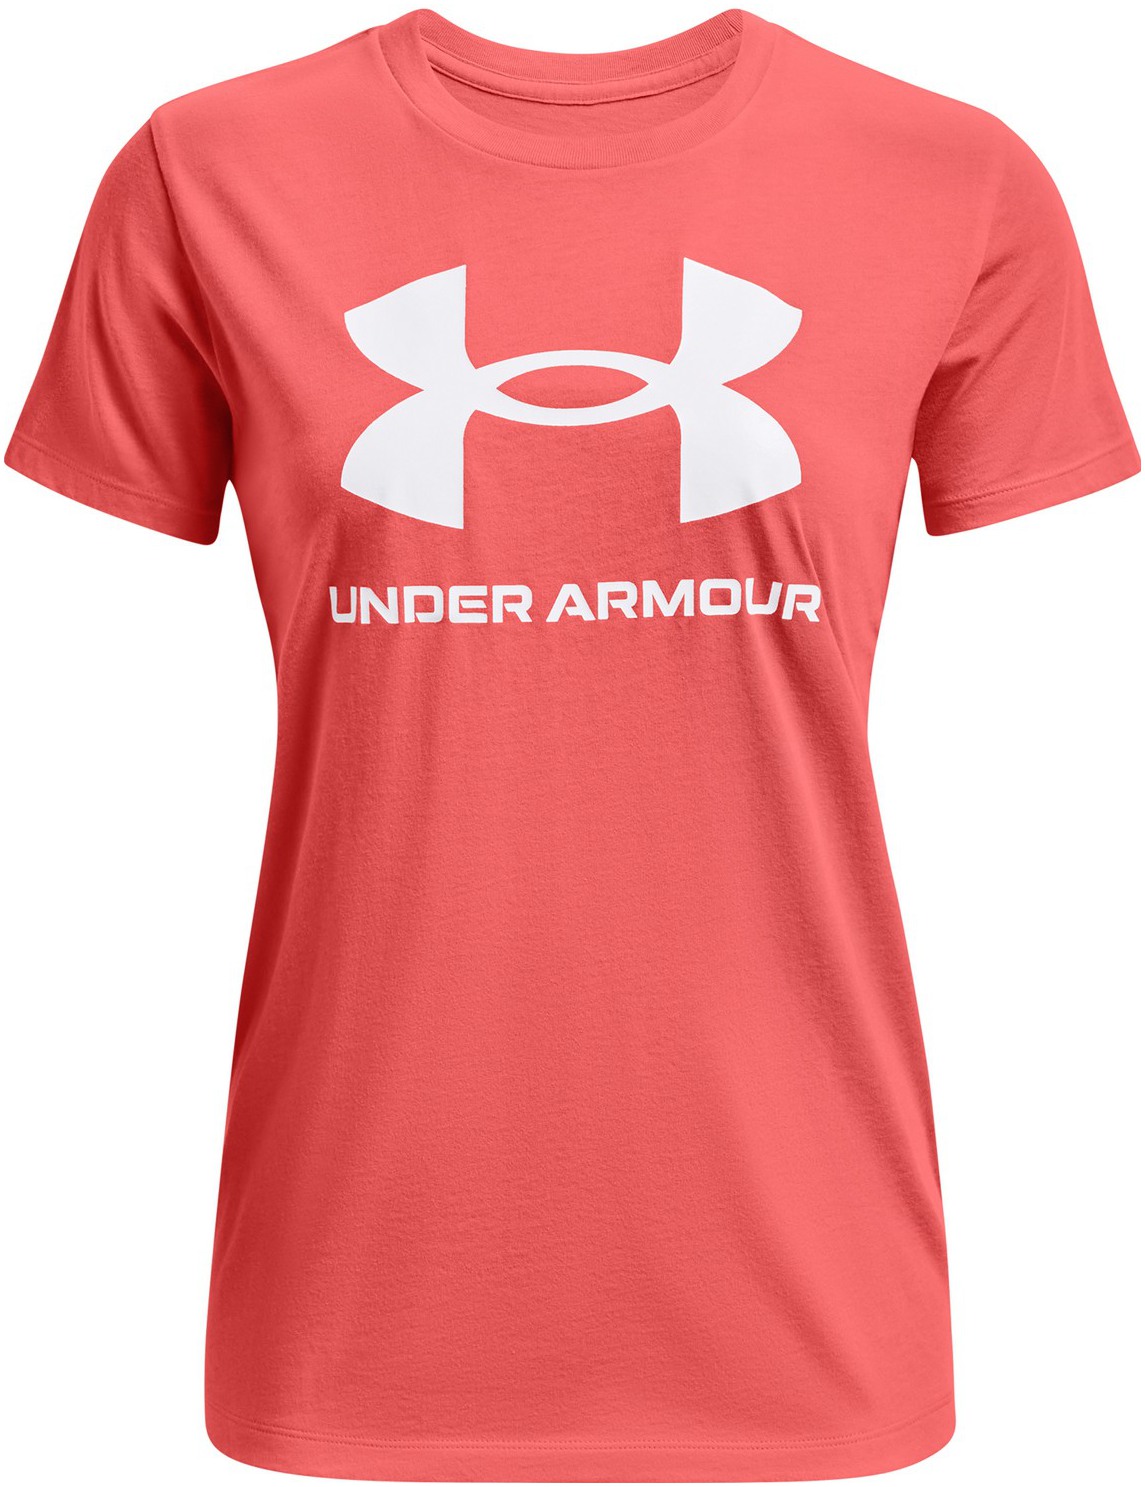 Under Armour Women's Graphic Sportstyle Fashion SSC Short-Sleeve Shirt